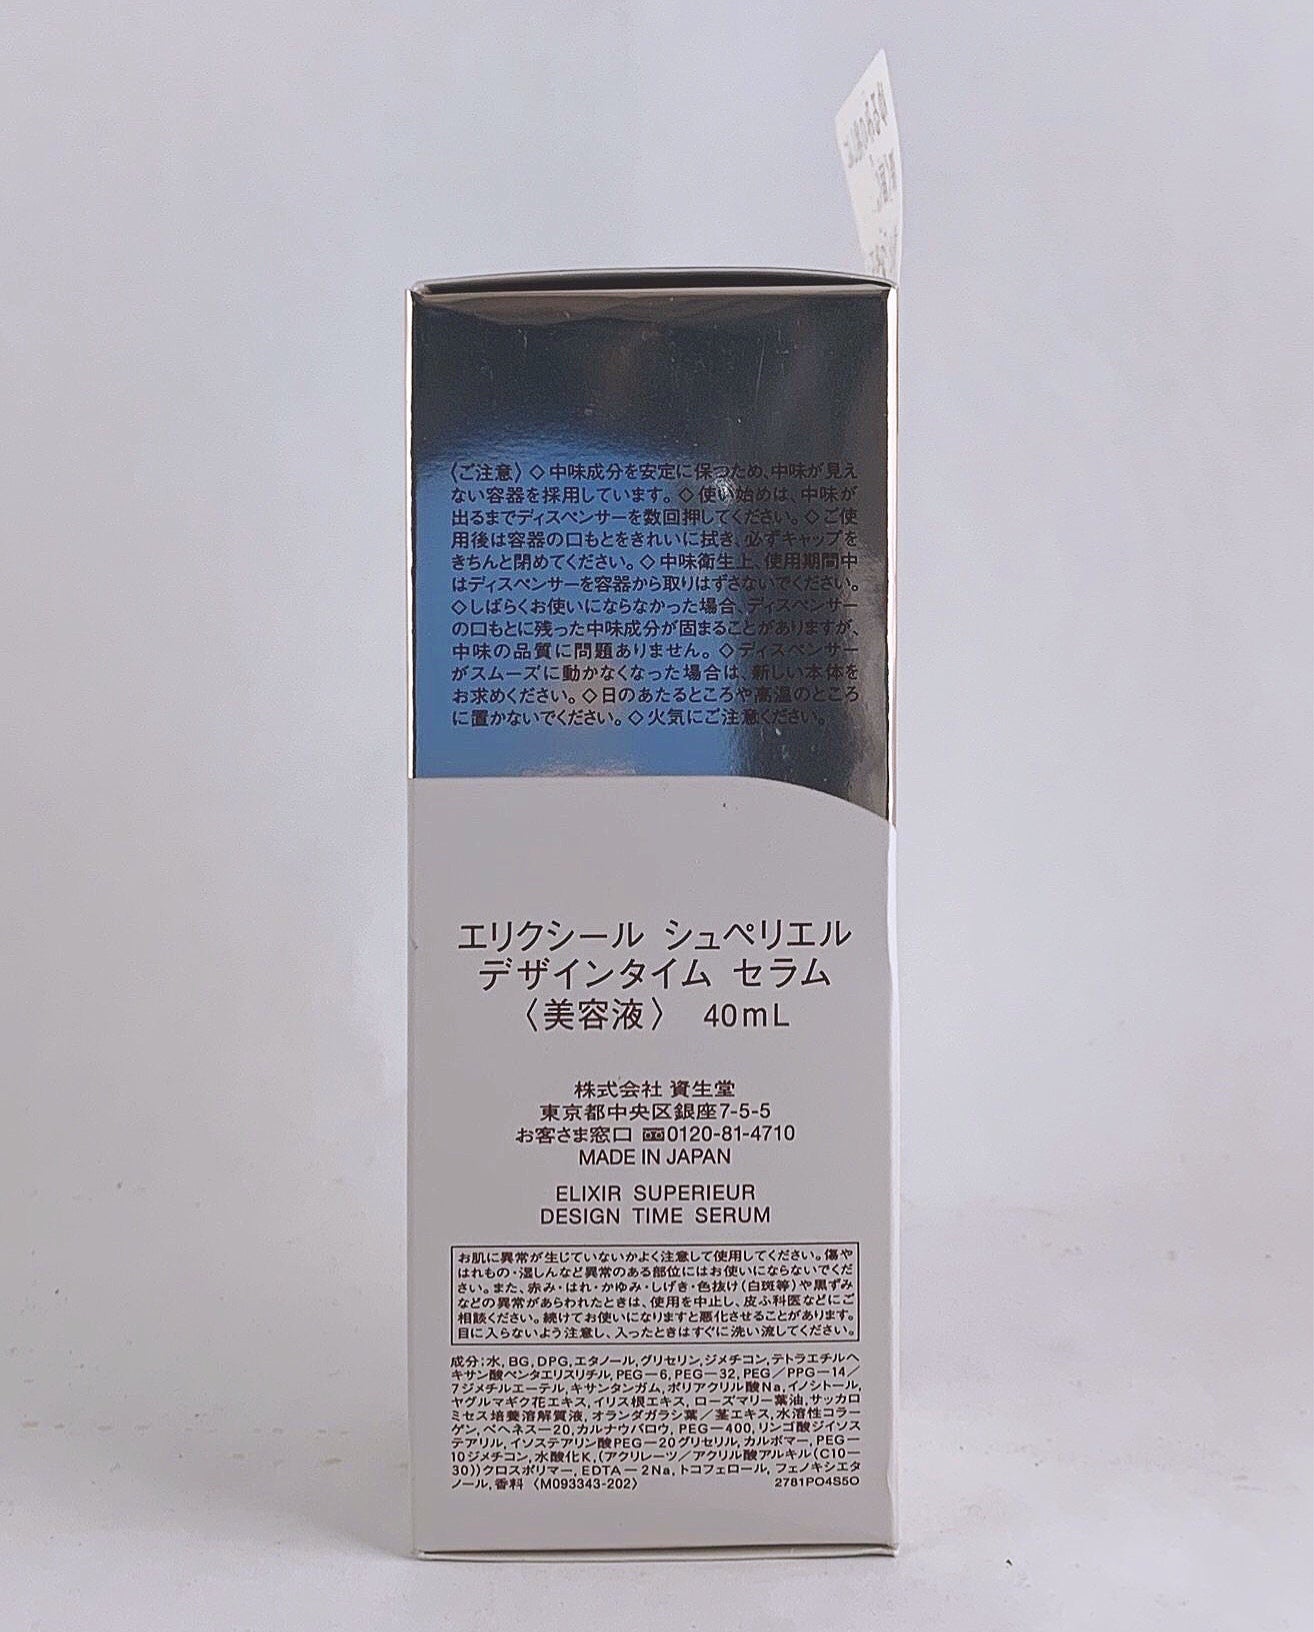 Shiseido Superieur Elixir Skin Care By Age Design Time Serum 40ml,essence,Japan.